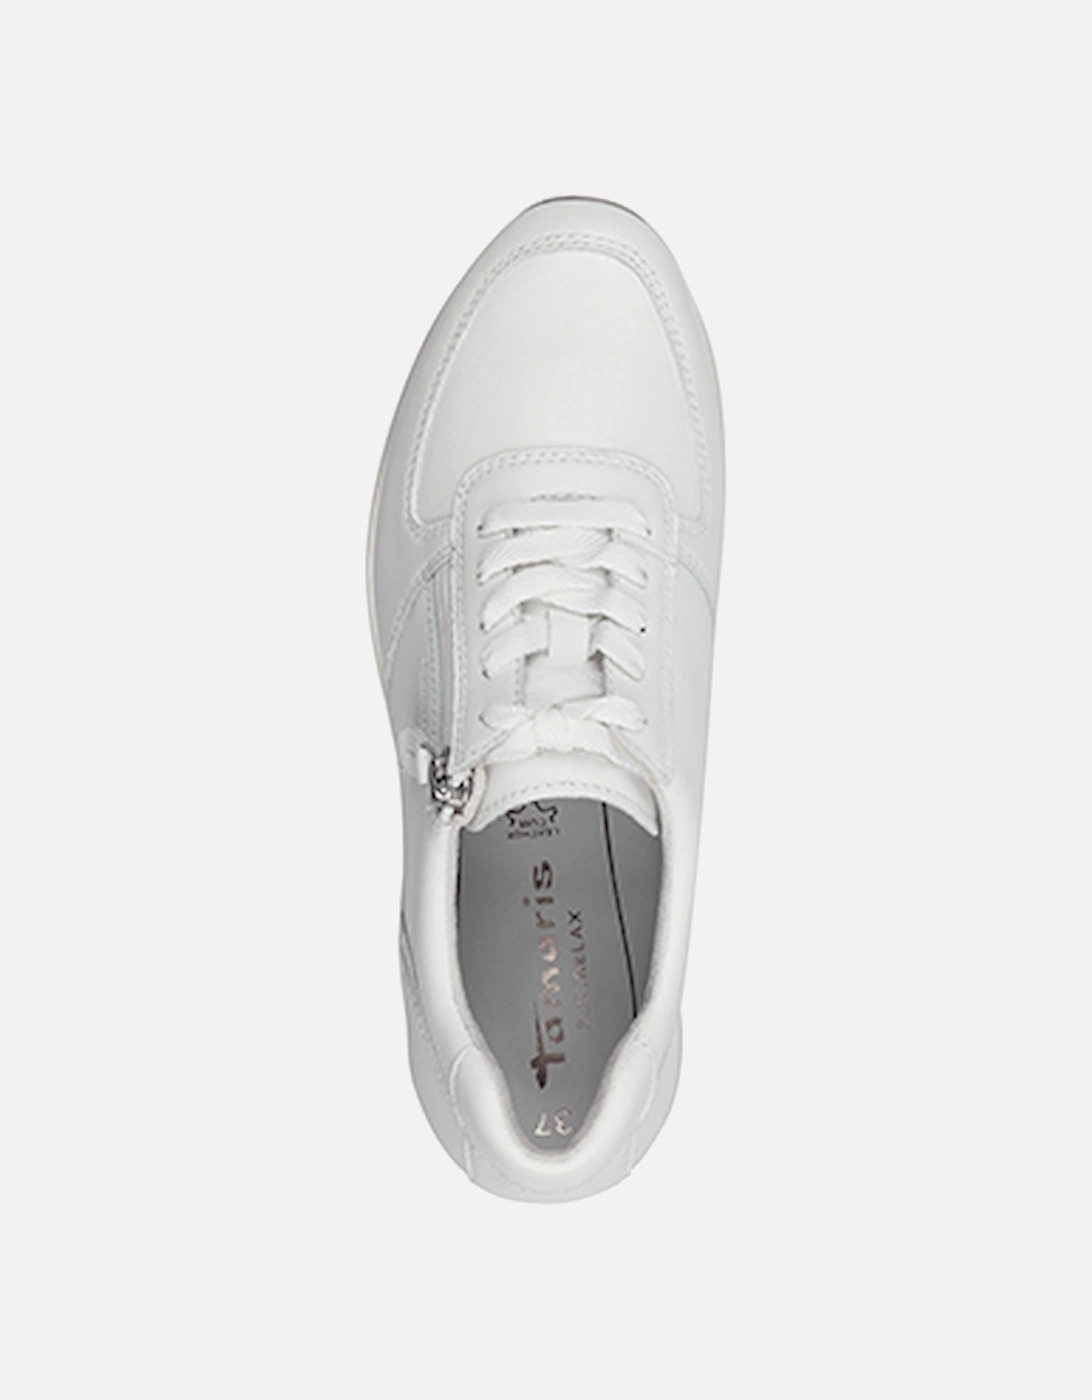 Women's Leather Sneaker White/Silver